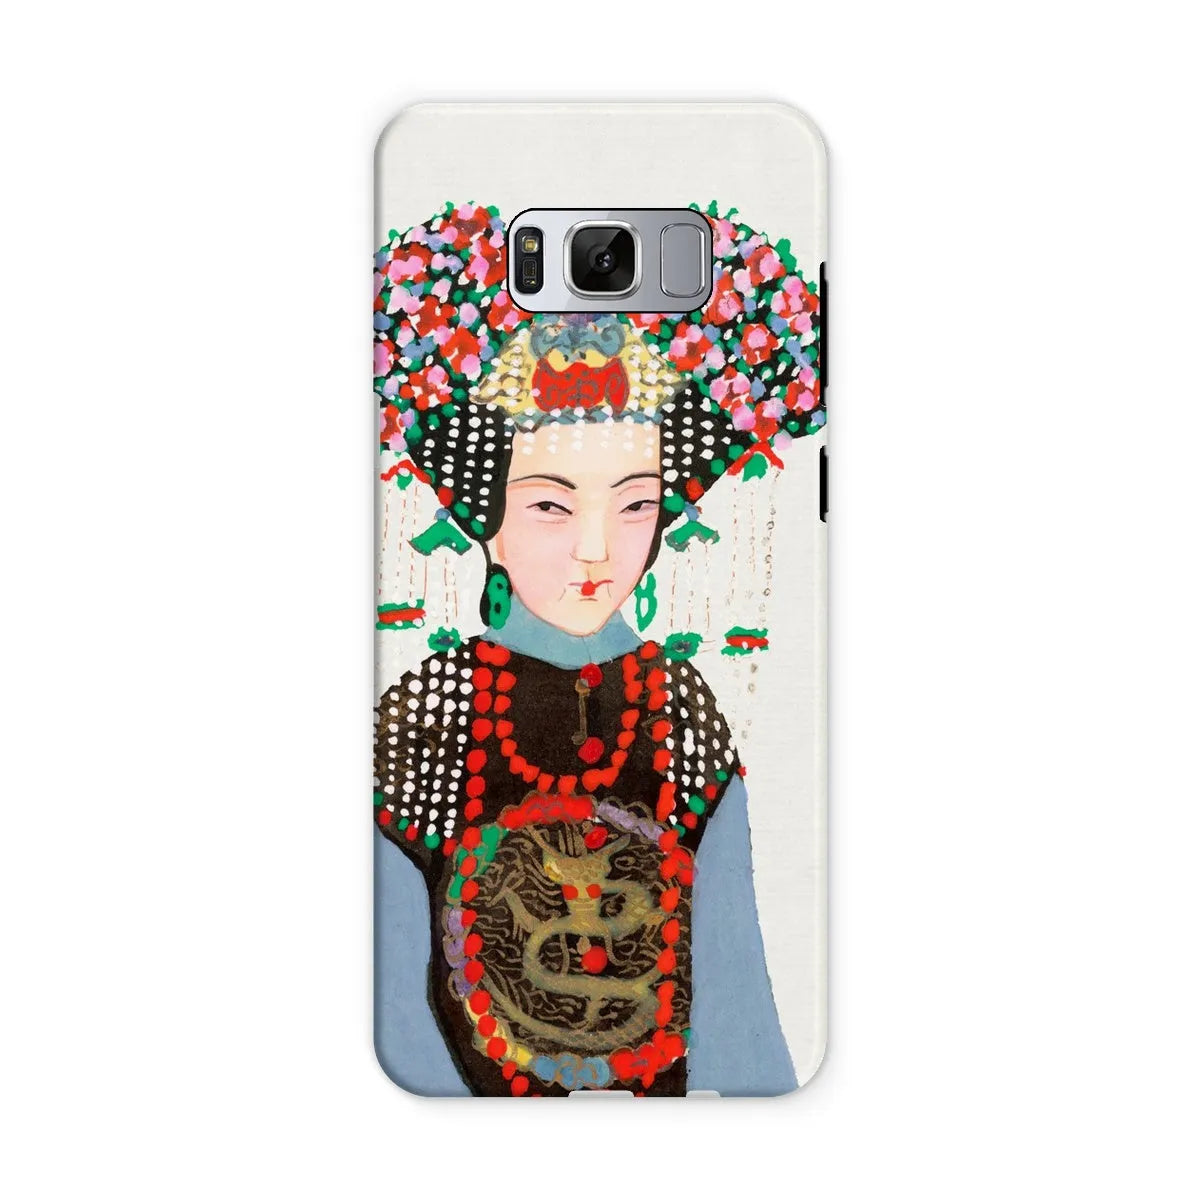 Chinese Empress - Manchu Art Phone Case - Samsung Galaxy S8 / Matte - Mobile Phone Cases - Aesthetic Art